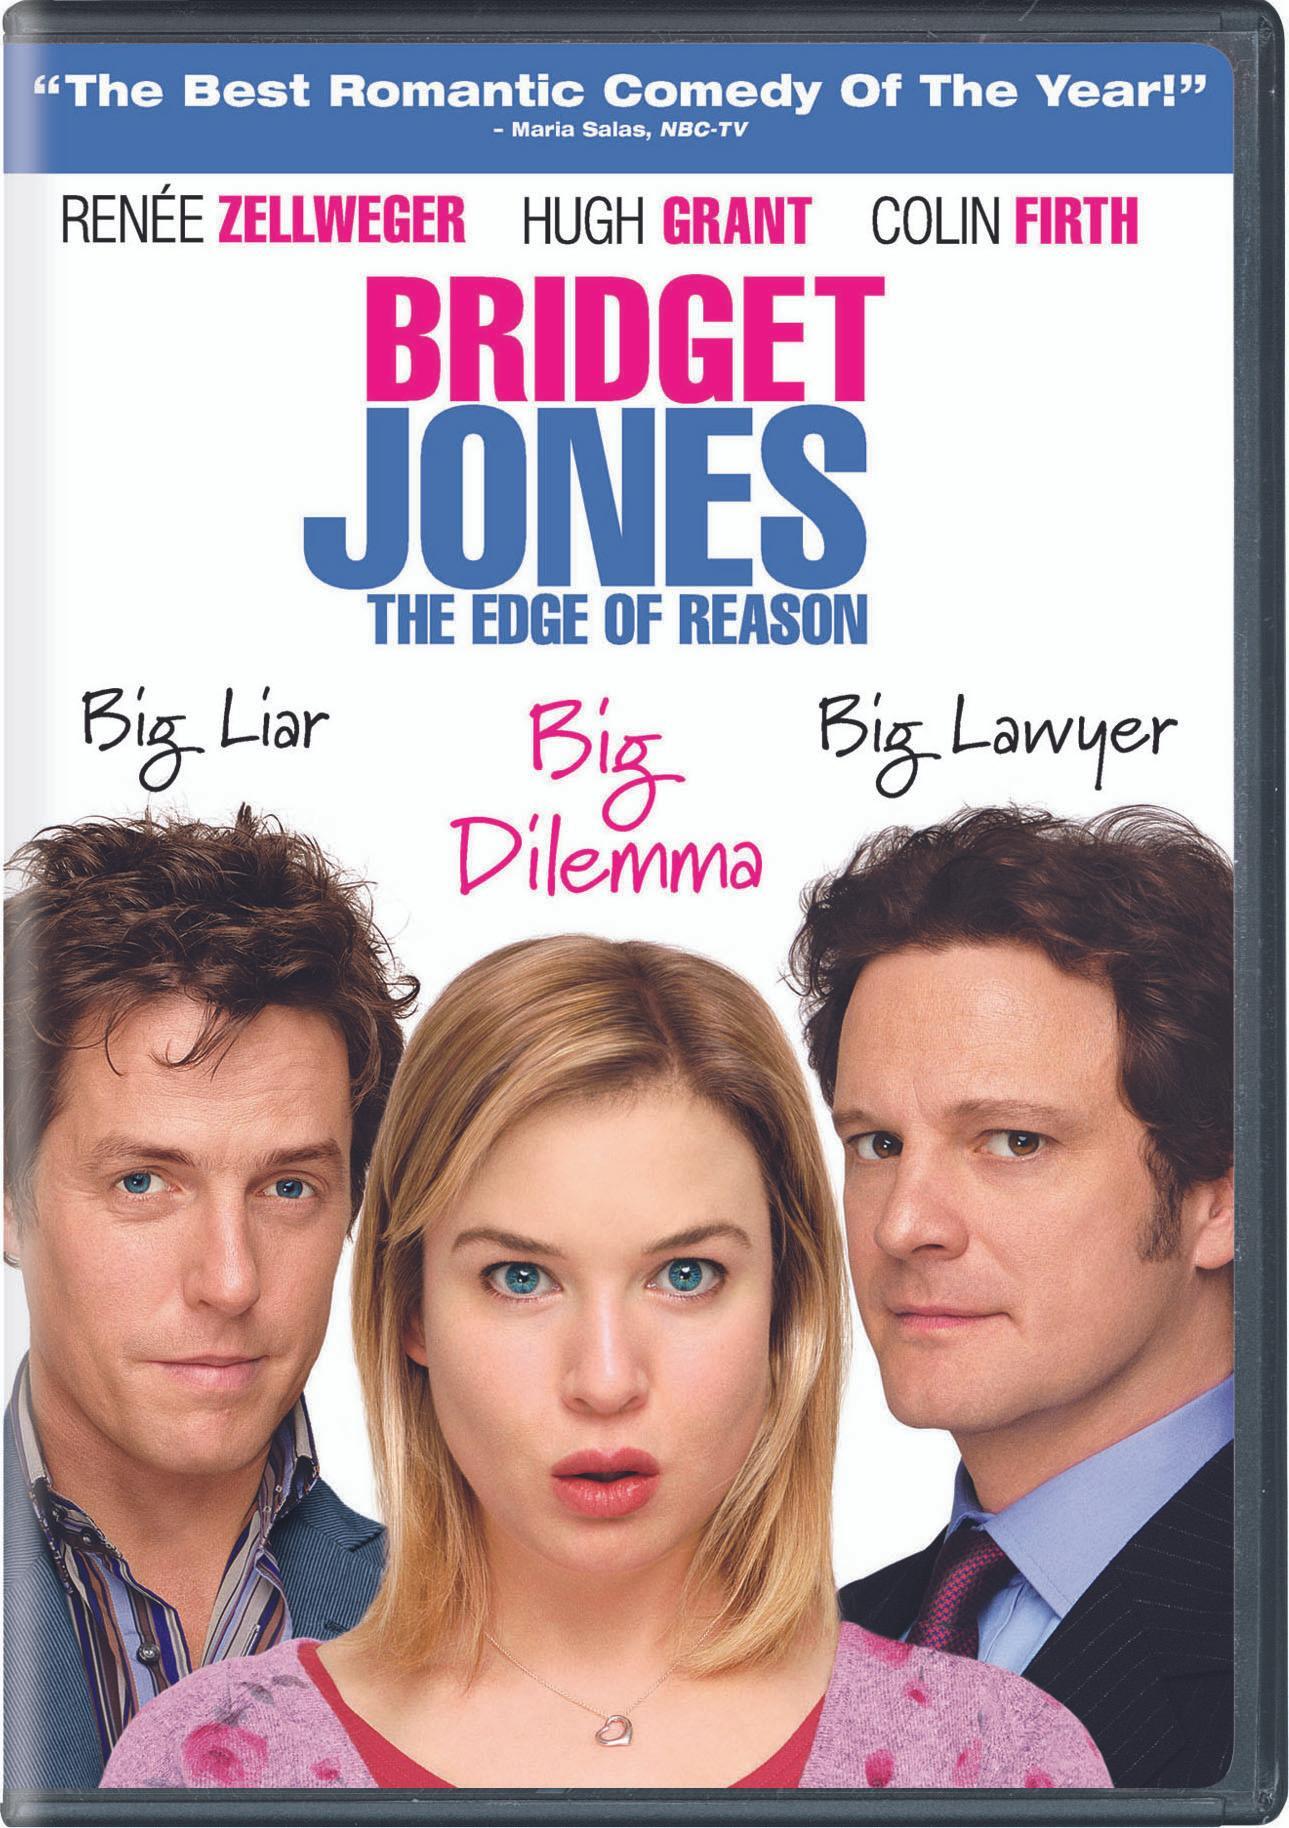 Bridget Jones: The Edge Of Reason (DVD Widescreen) - DVD [ 2004 ]  - Comedy Movies On DVD - Movies On GRUV